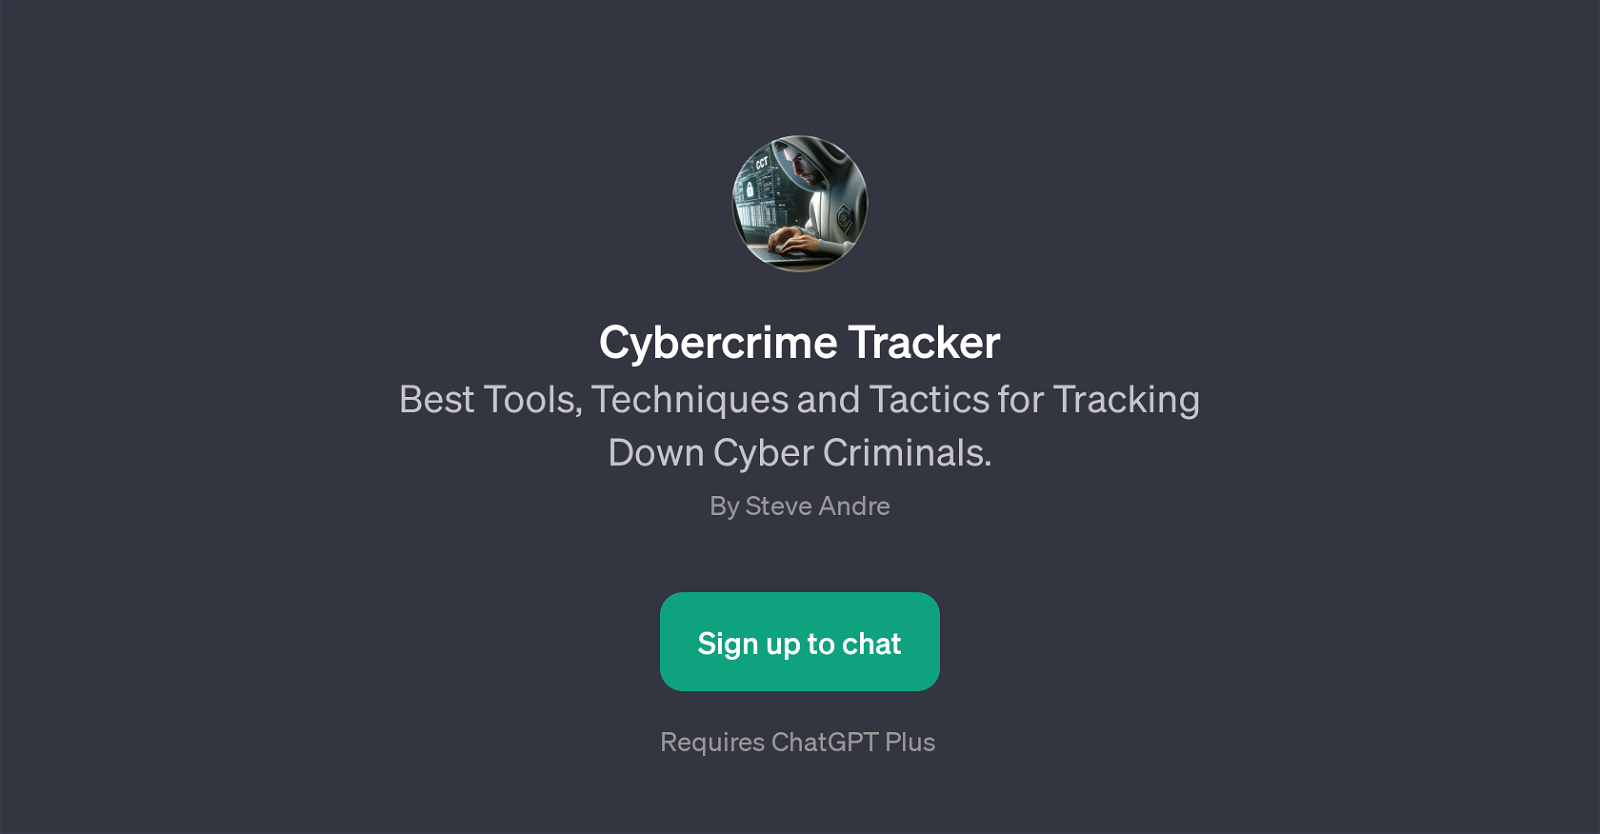 Cybercrime Tracker website